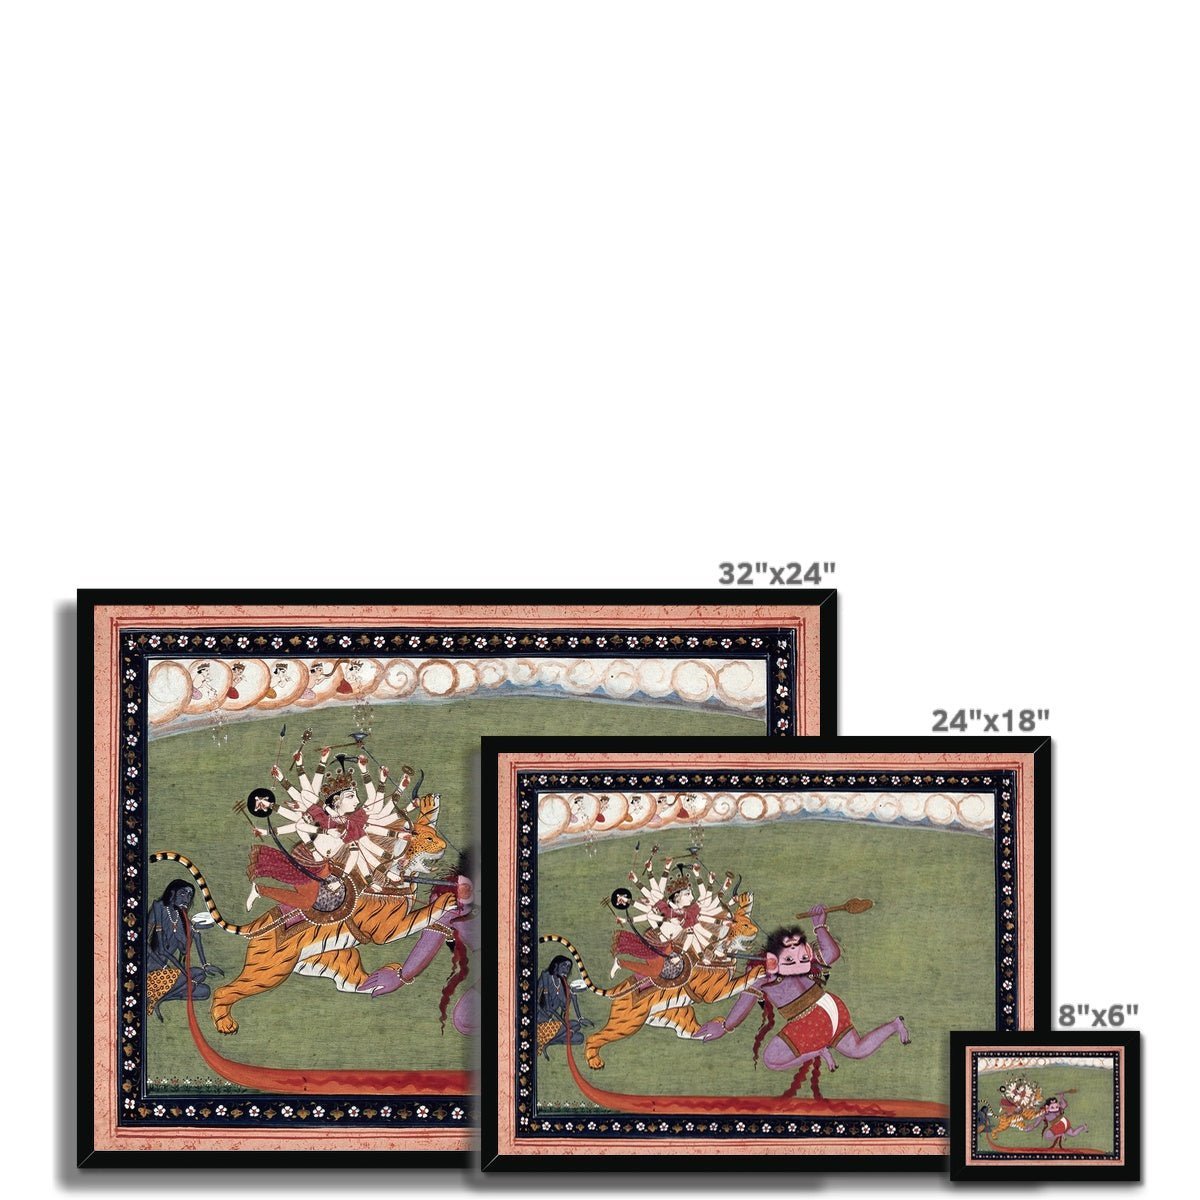 Fine art Goddess Durga, Shakti, Defeats Demon Mahishasura | Indian Mythology Folklore | Devi Bhakti Guru Framed Art Print